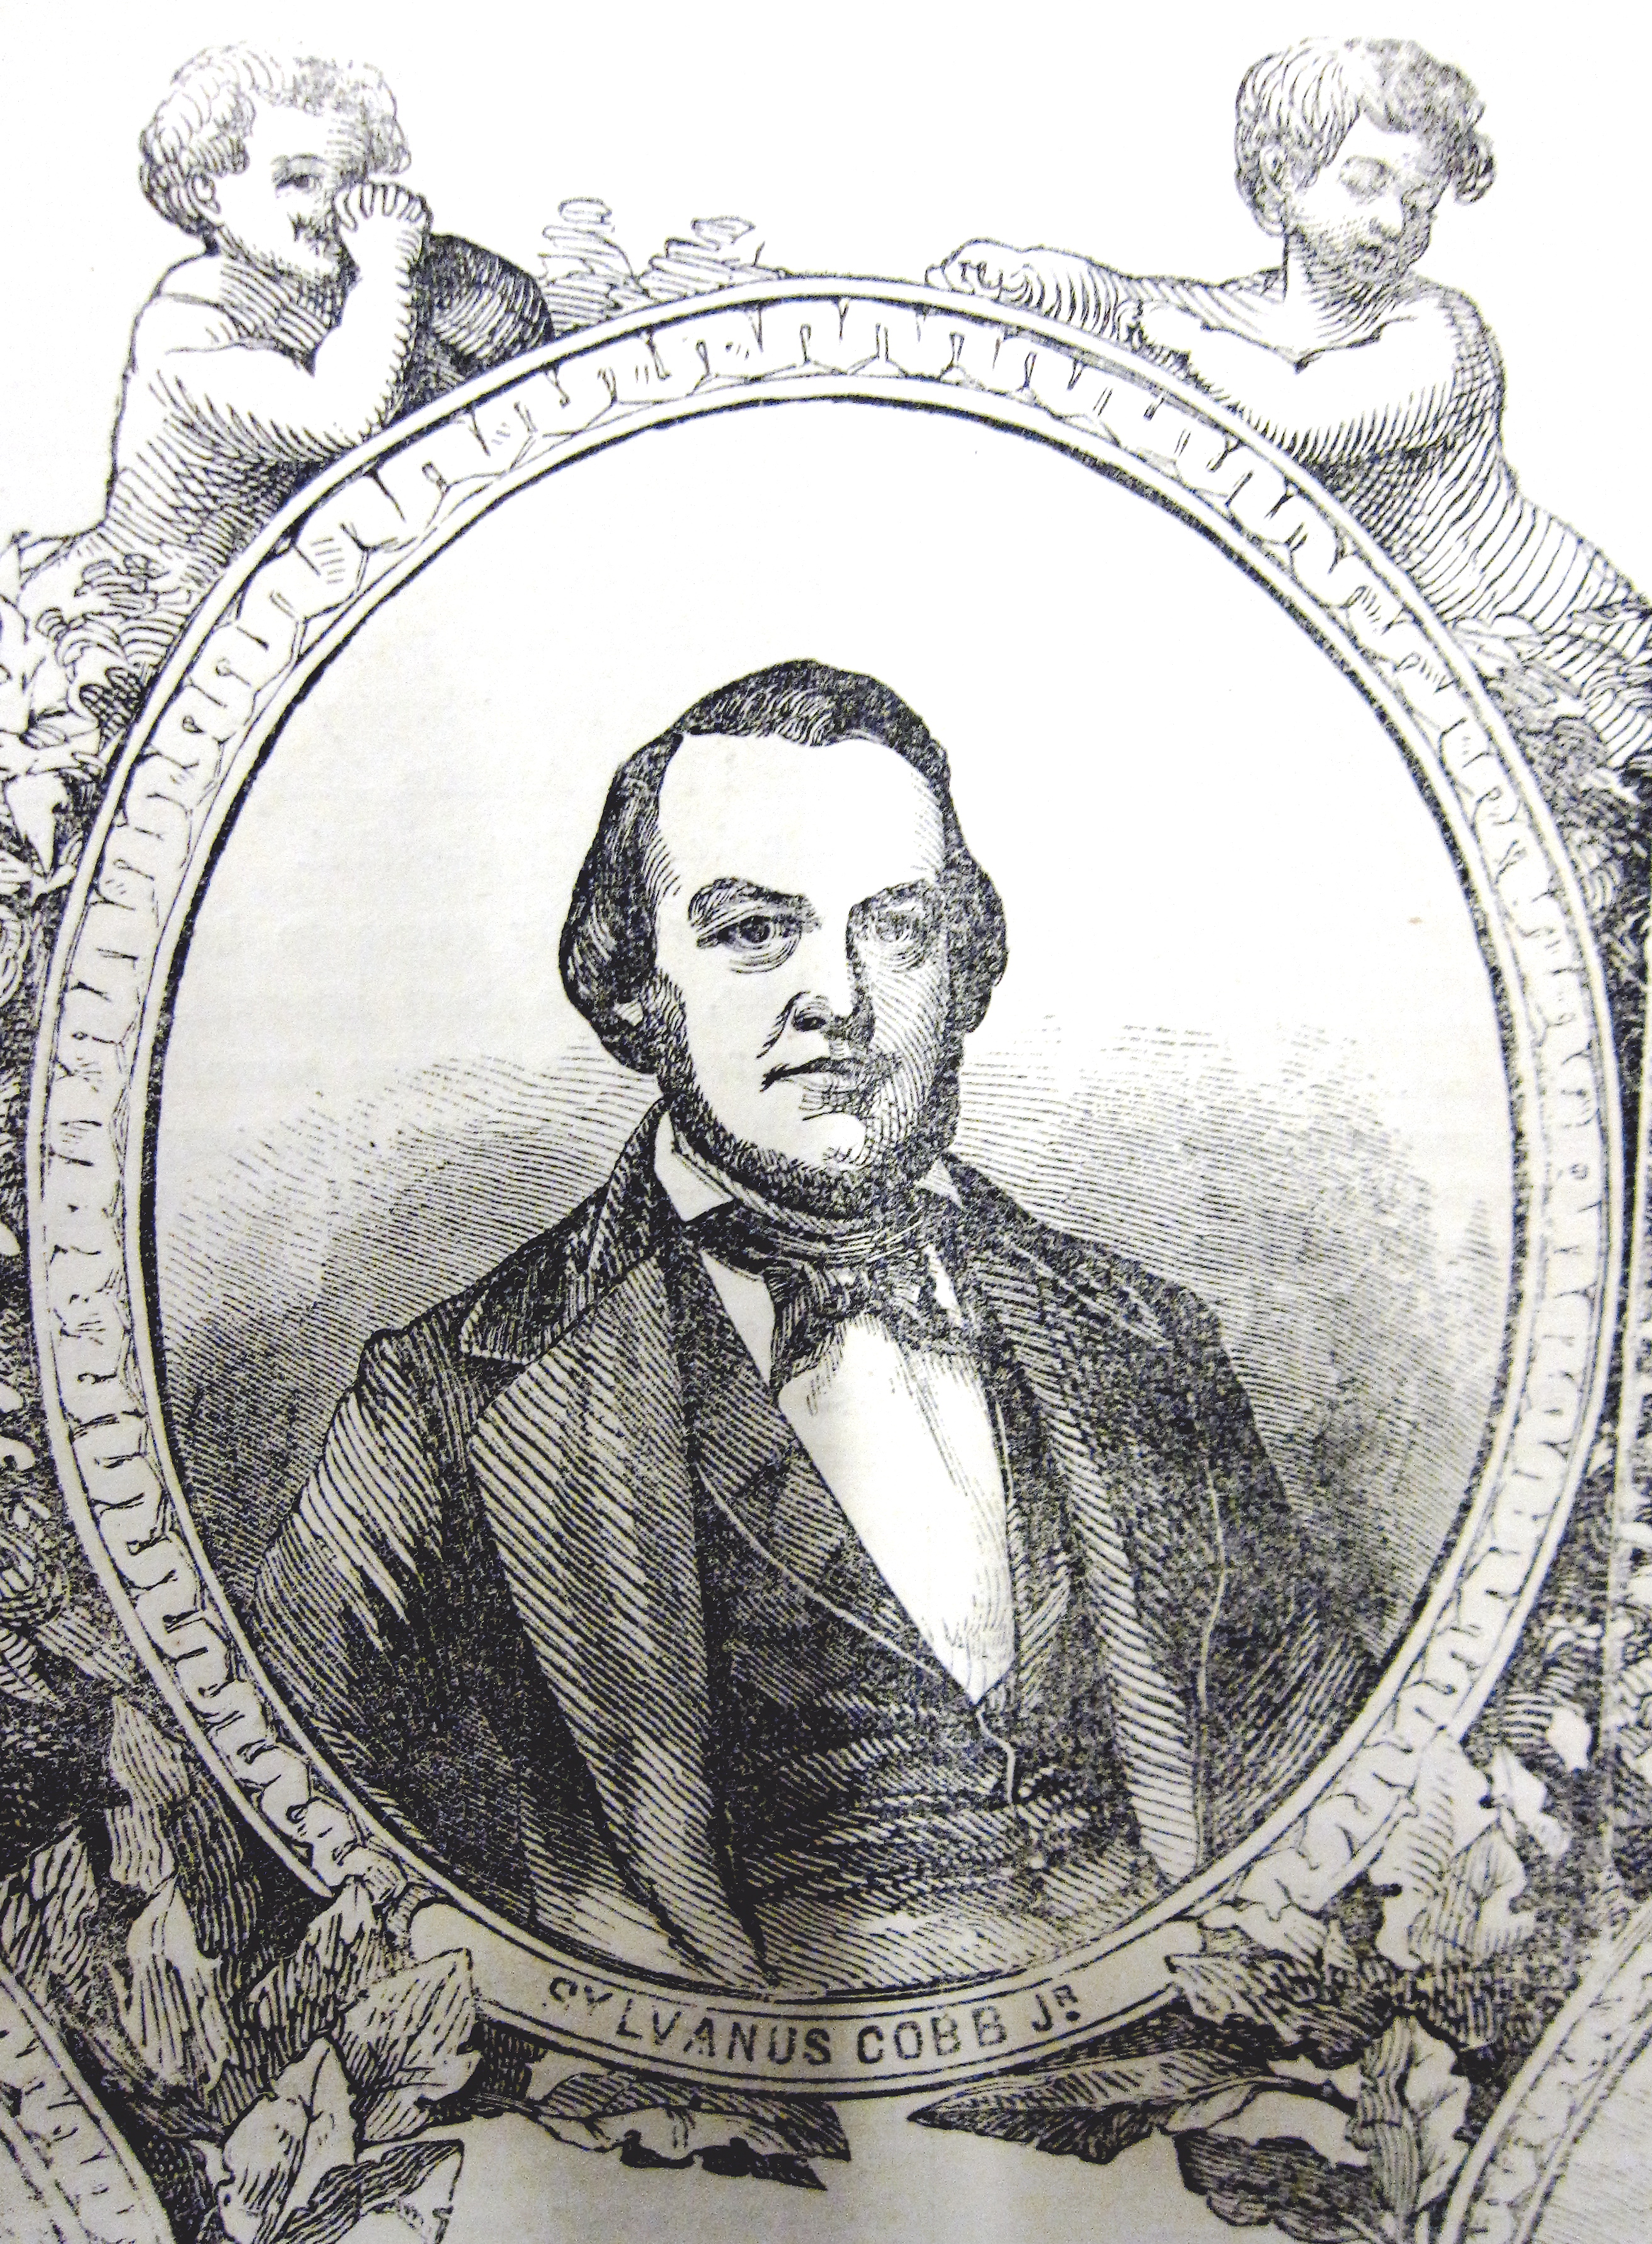 Sylvanus Cobb Jr. 1852